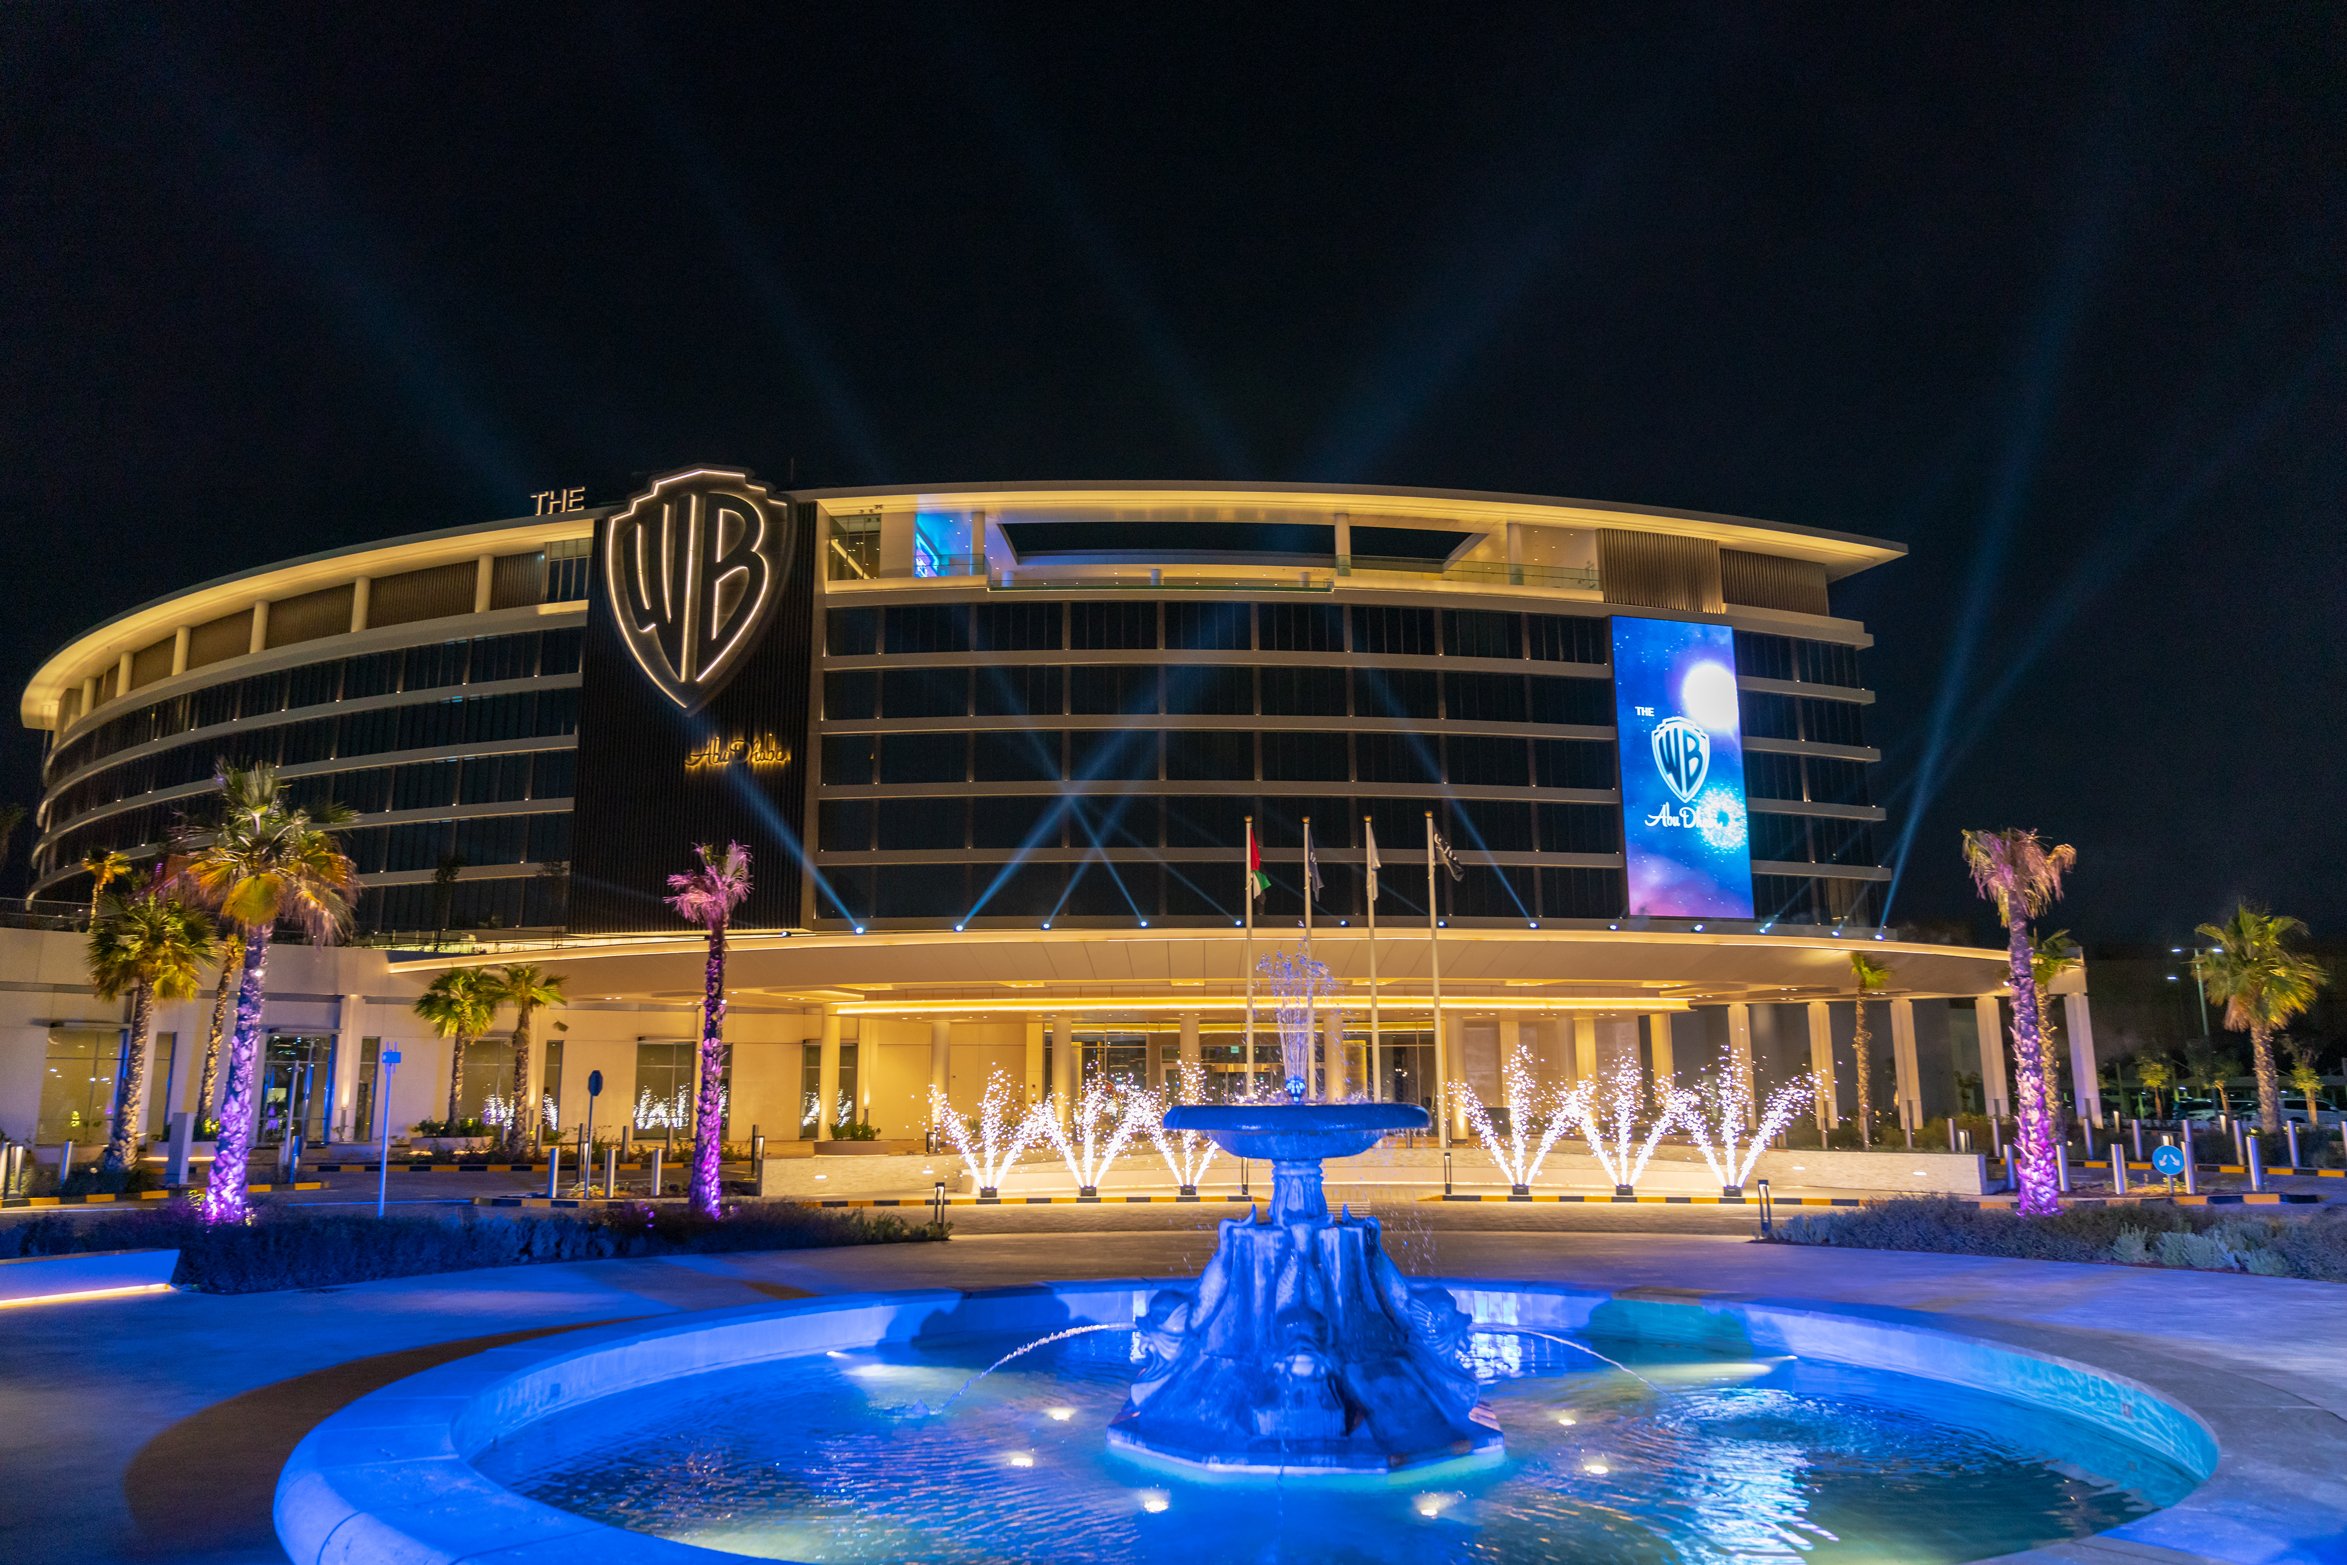 Exterior of the Warner Bros Abu Dhabi hotel lit up at night